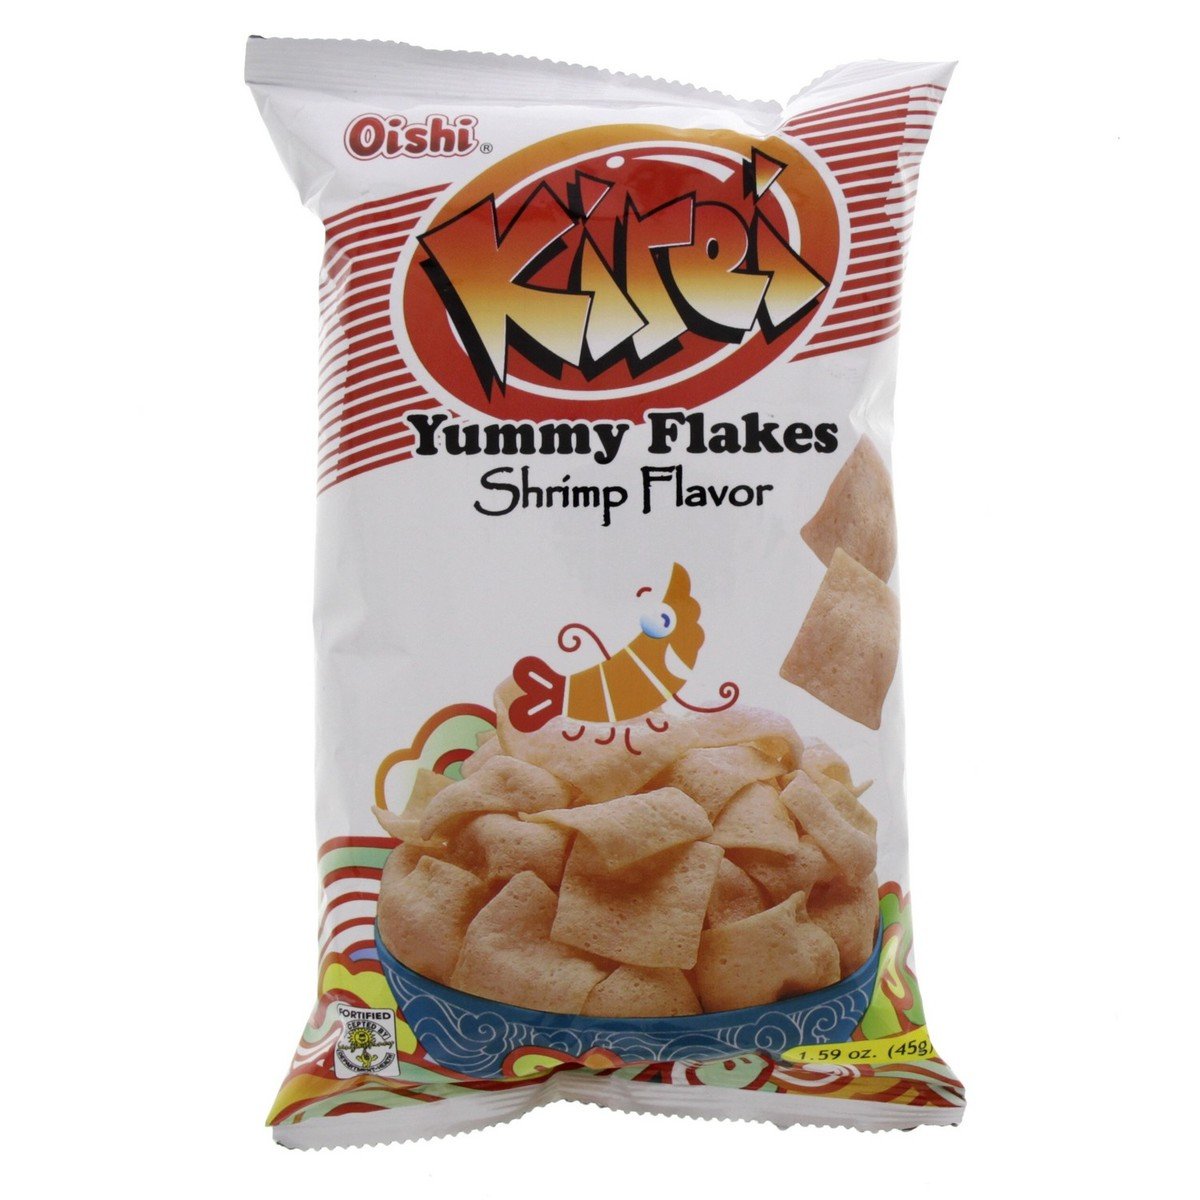 Oishi Kirei Yummy Flakes Shrimp Flavor 45 g